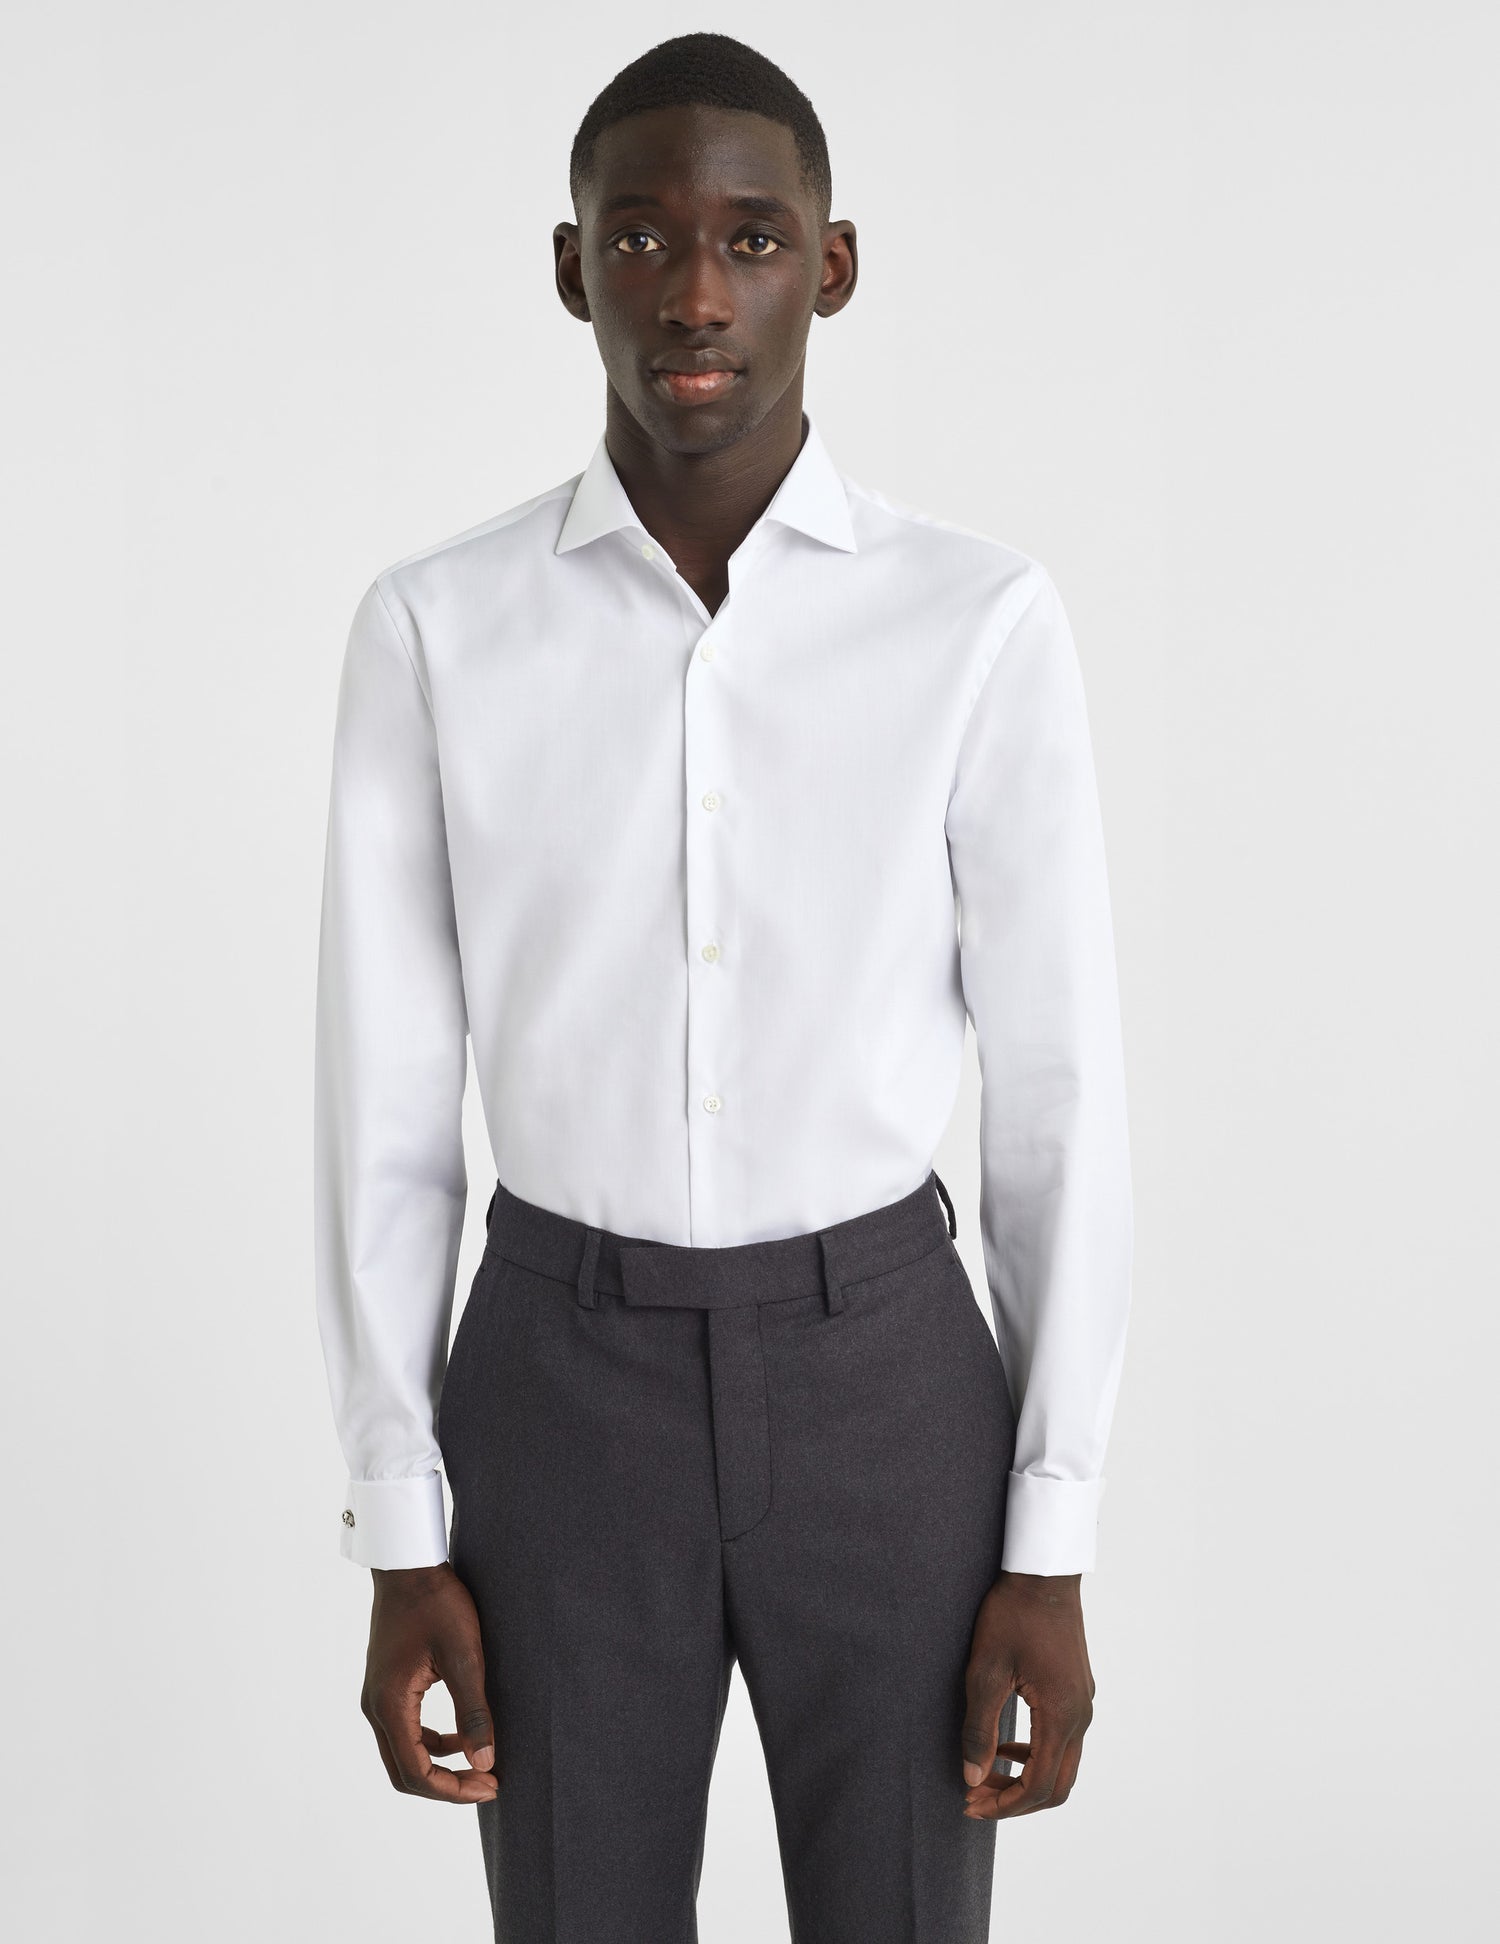 Semi-fitted white shirt - Twill - Italian Collar - French Cuffs#3